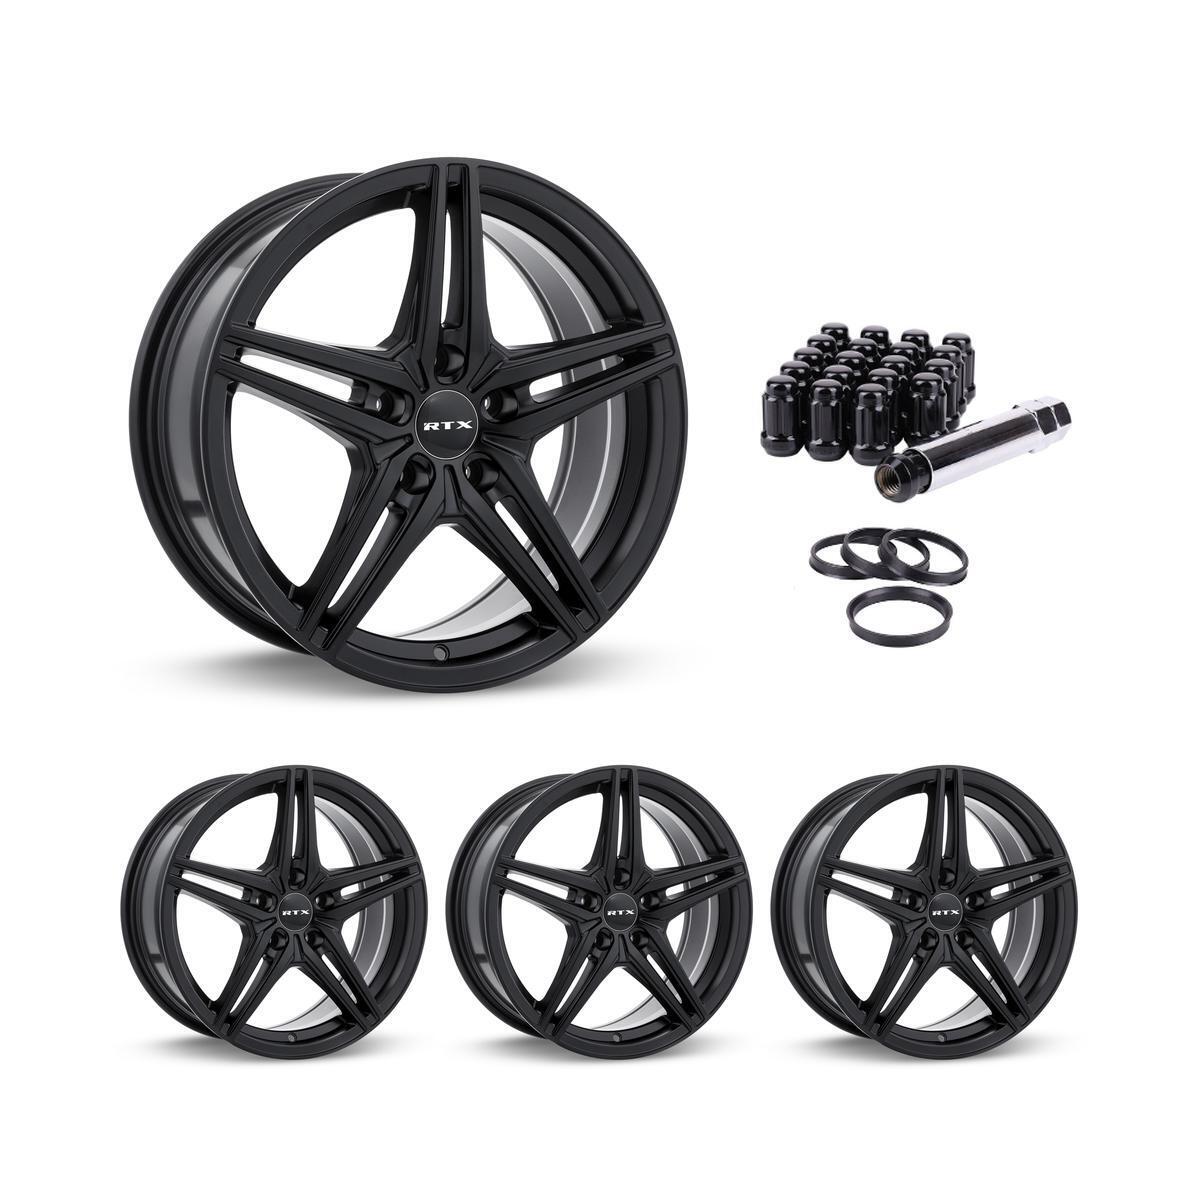 Wheel Rims Set with Black Lug Nuts Kit for 90-03 Mazda Protege P845535 15 inch